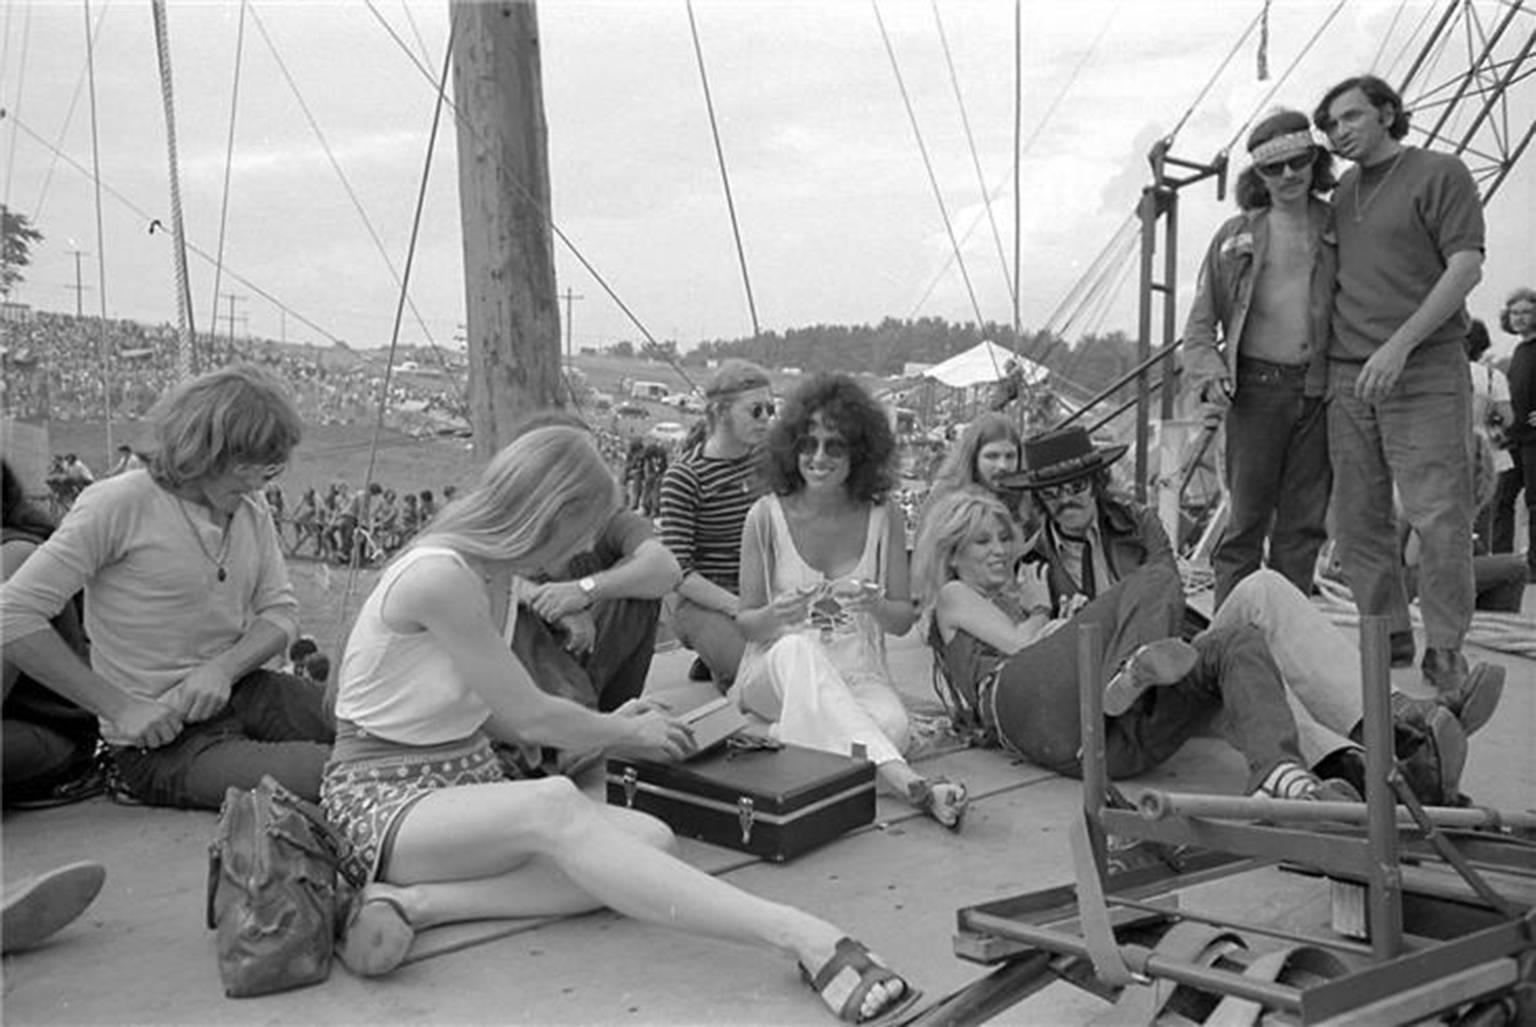 Henry Diltz Black and White Photograph - Grace Slick "Woodstock", Bethel, NY 1969